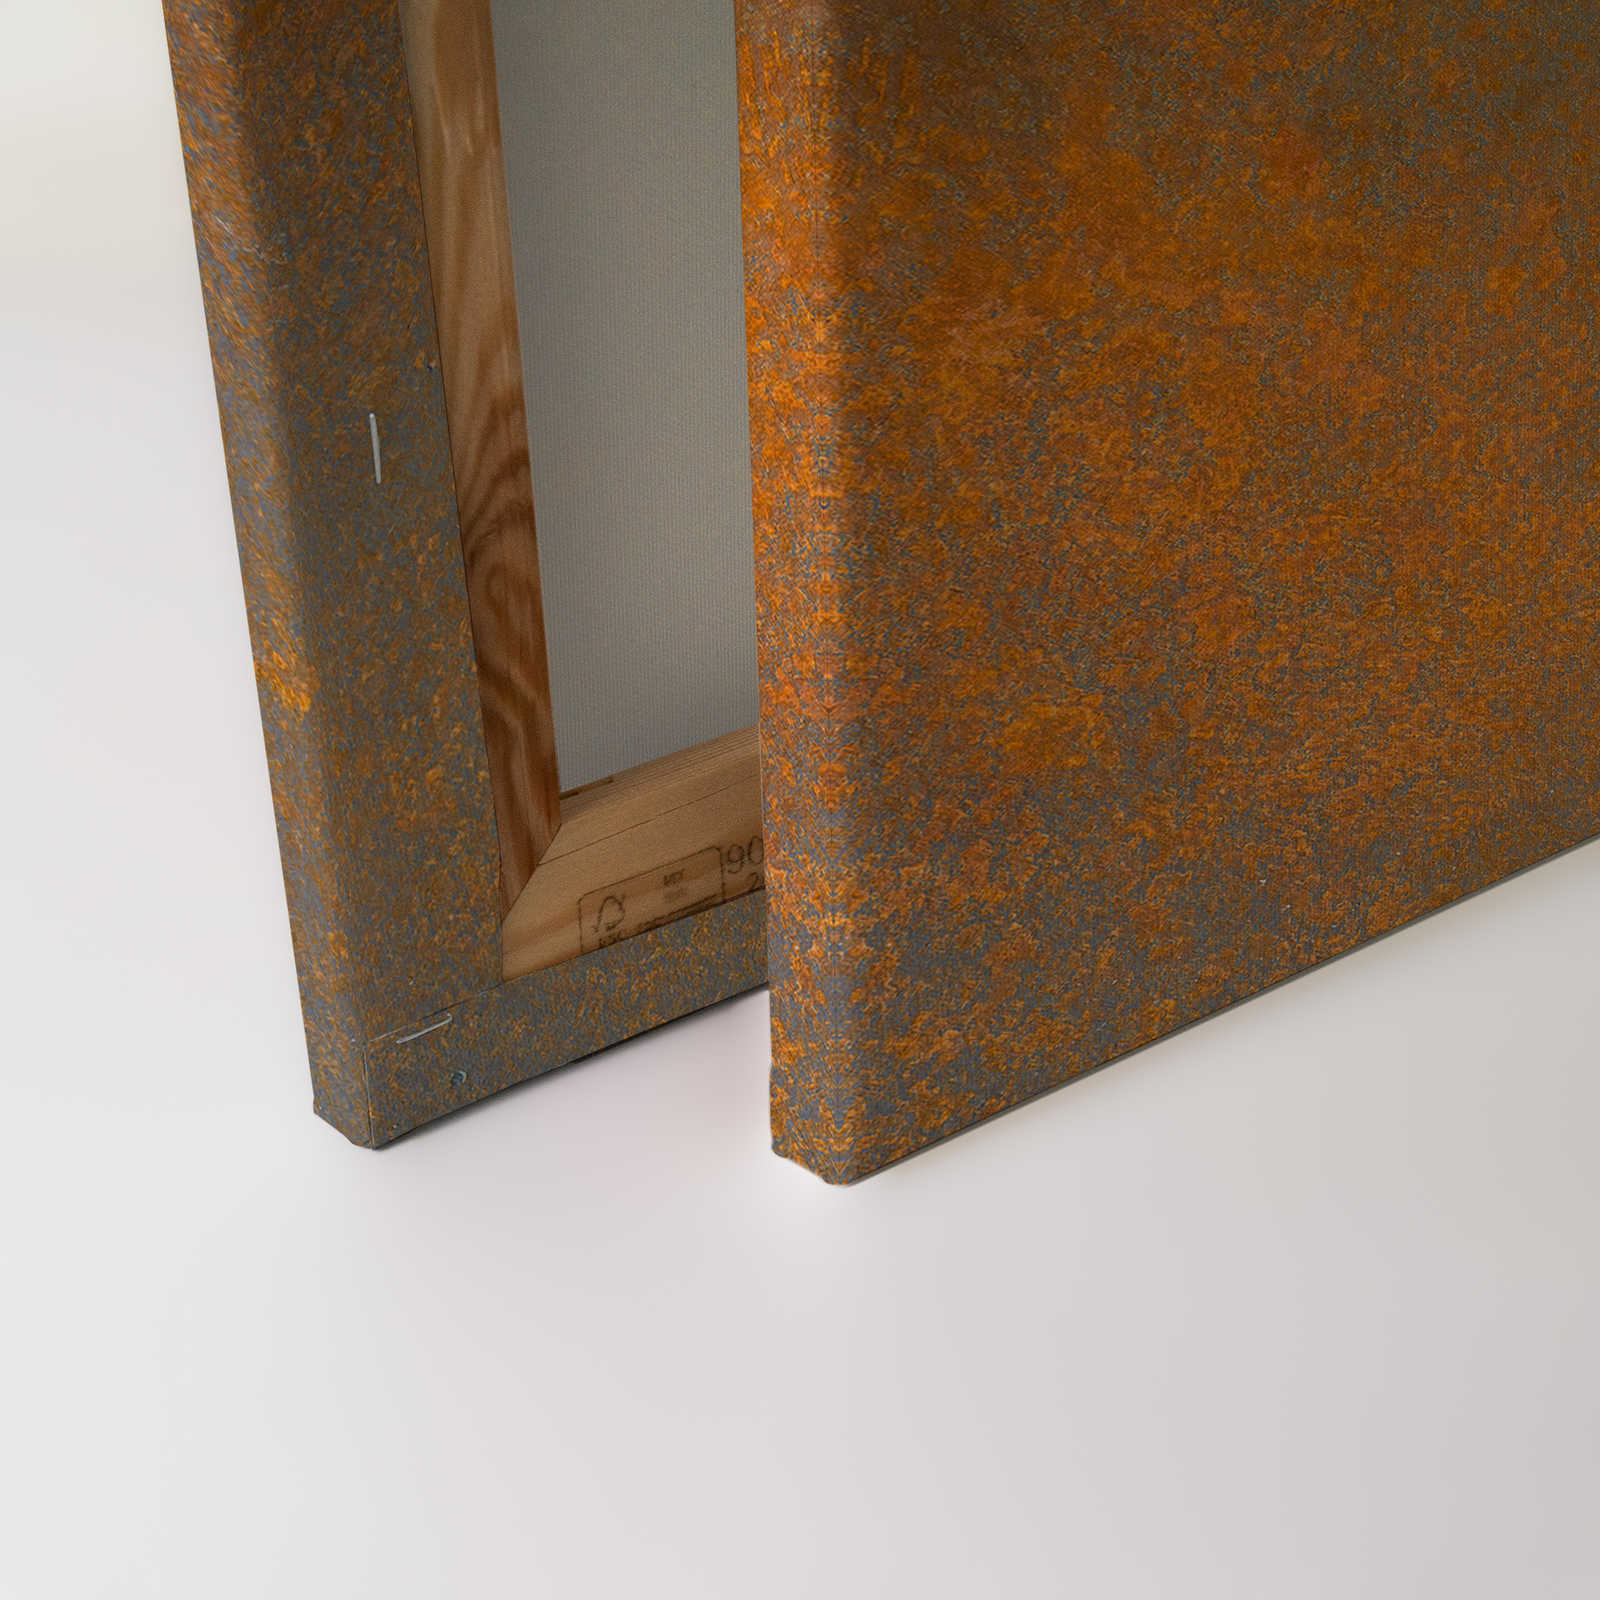             Rust Optics Canvas Painting Orange Brown with Used Look - 1.20 m x 0.80 m
        